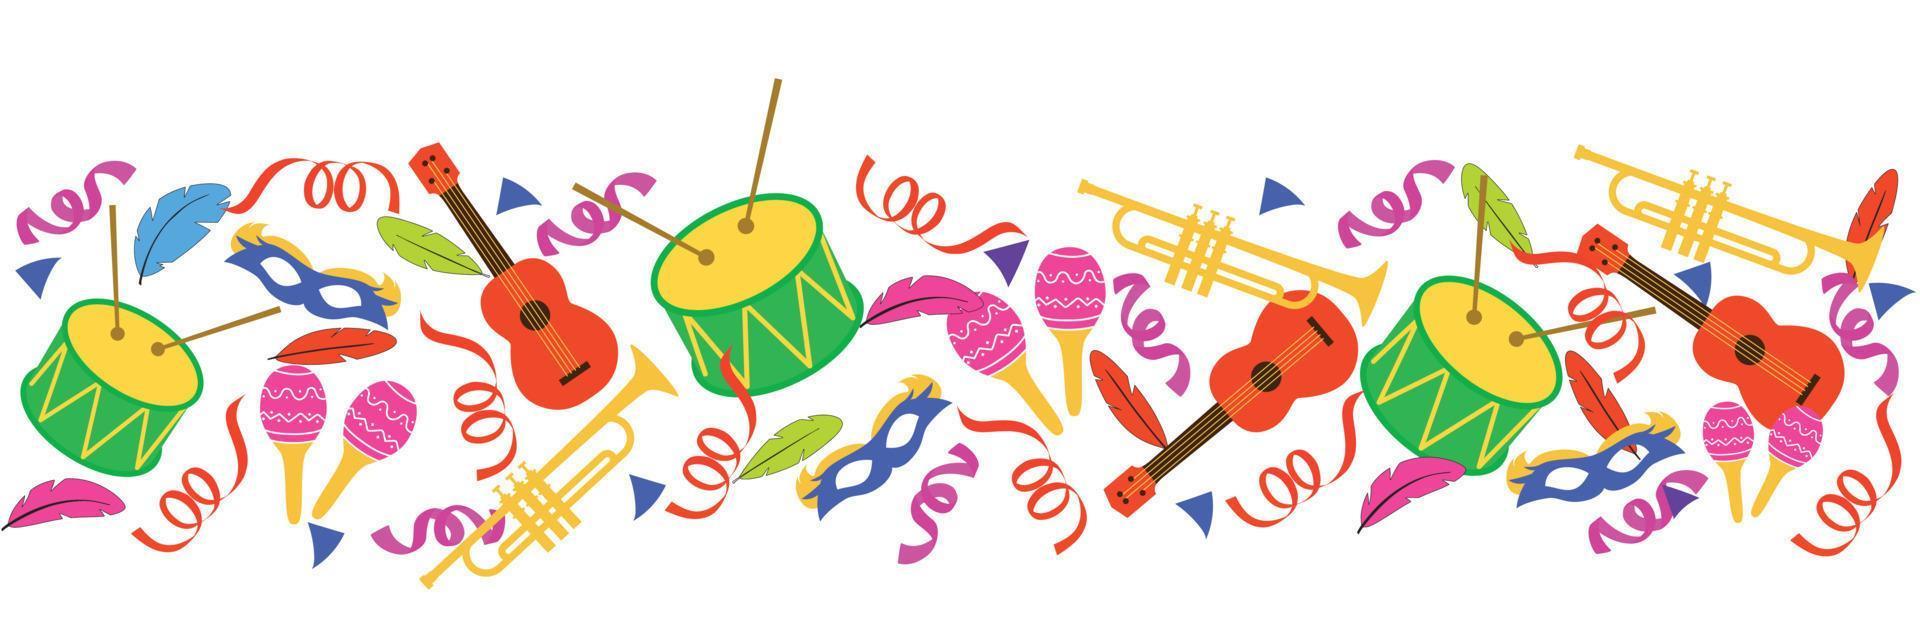 Carnival banner with carnival elements. Drum, maracas, ukulele, trumpet, mask, serpentine vector